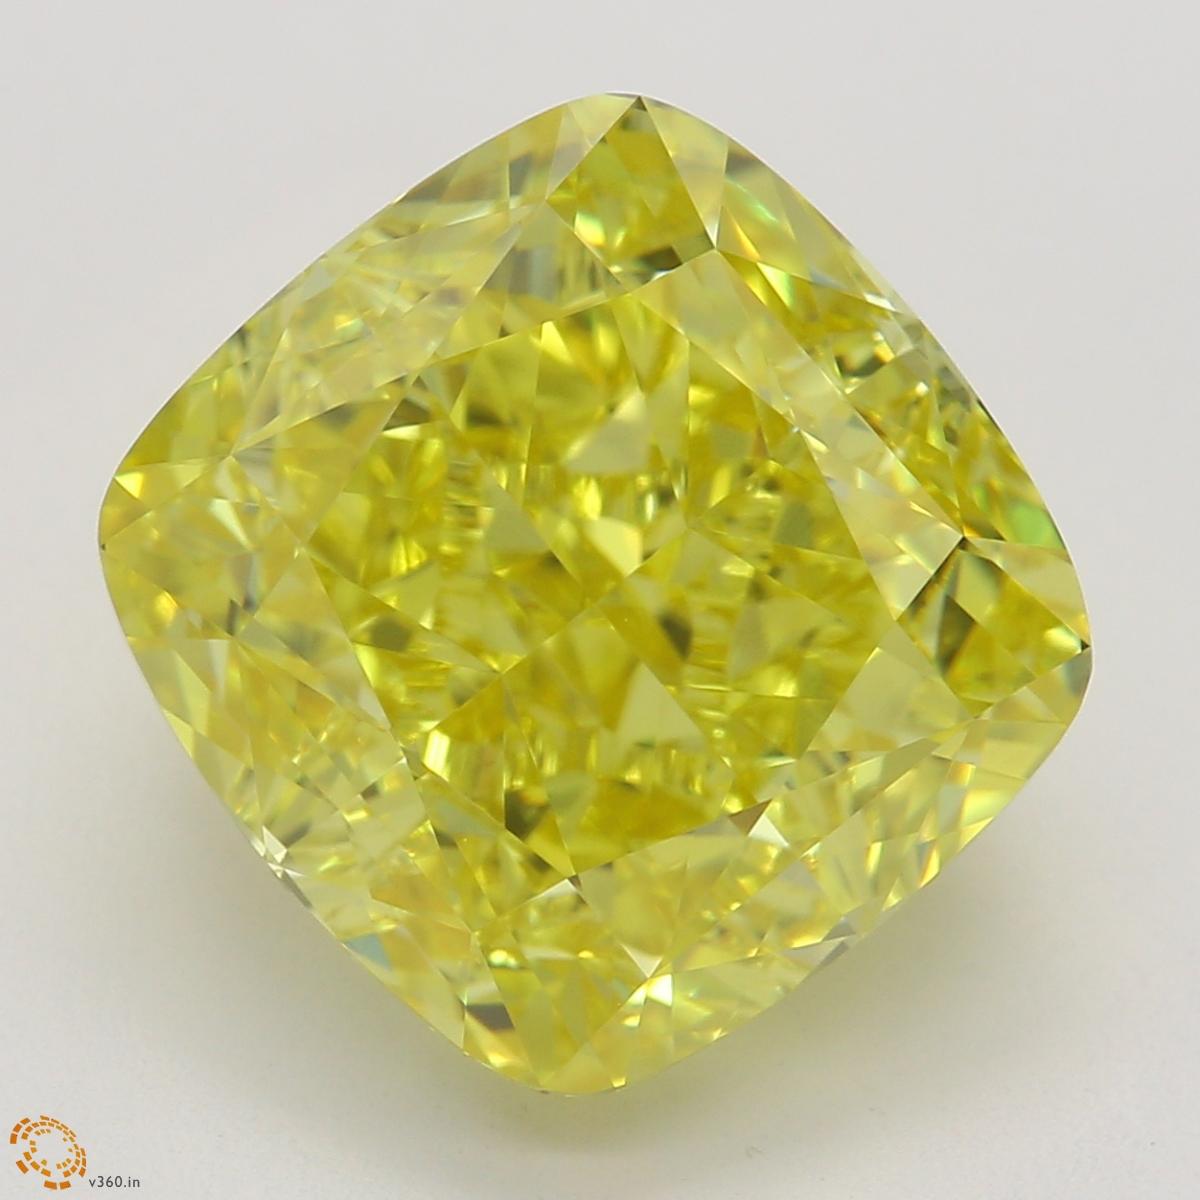 how much are yellow diamonds worth